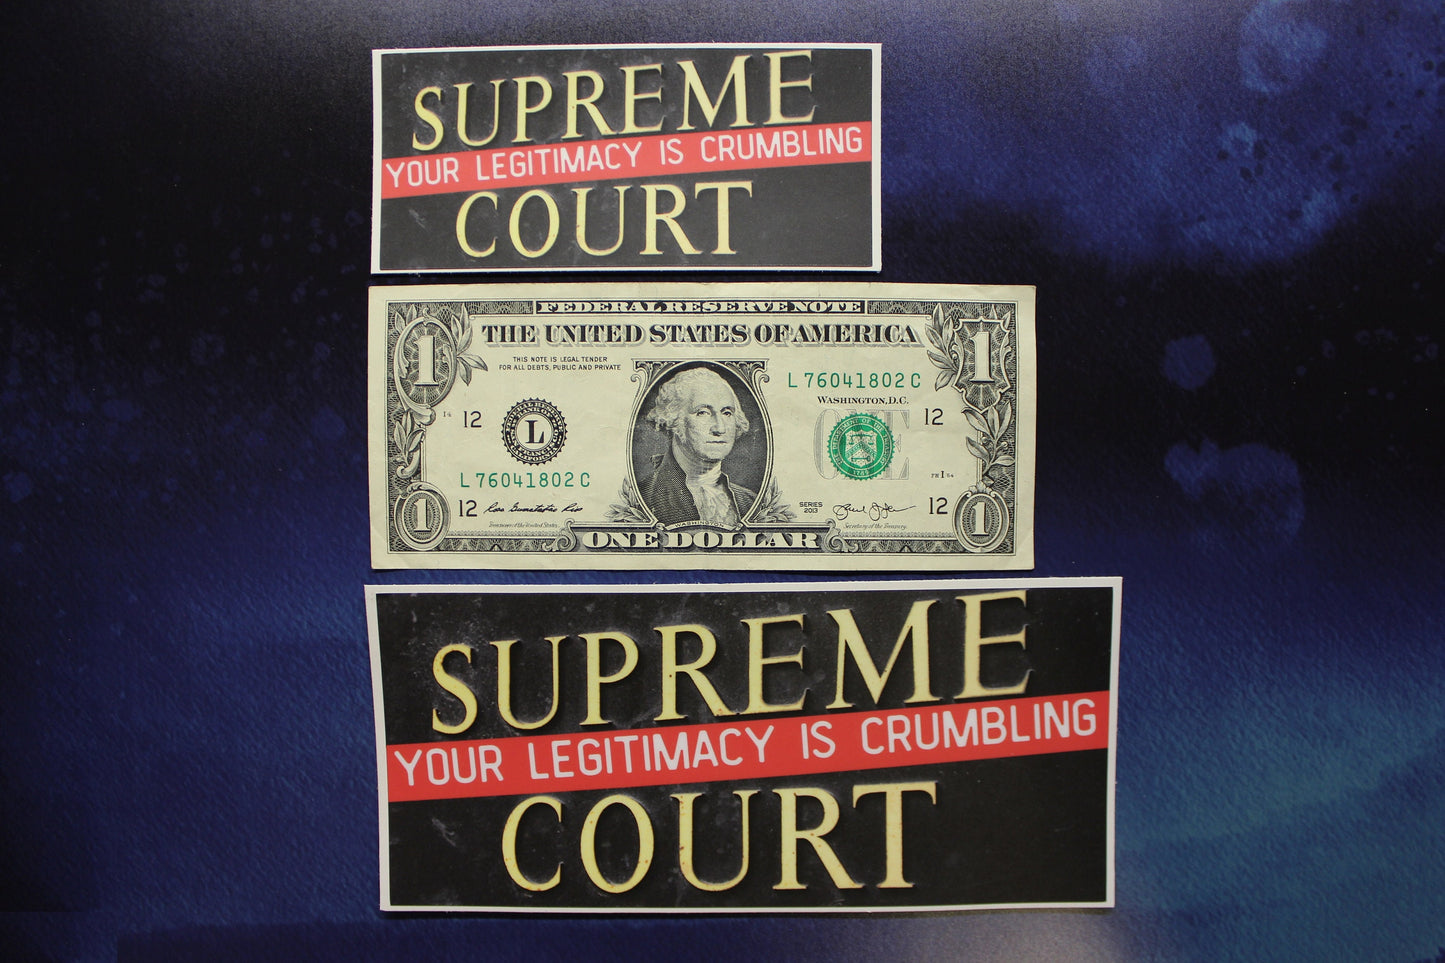 Supreme Court's Legitimacy is Crumbling Vinyl Sticker